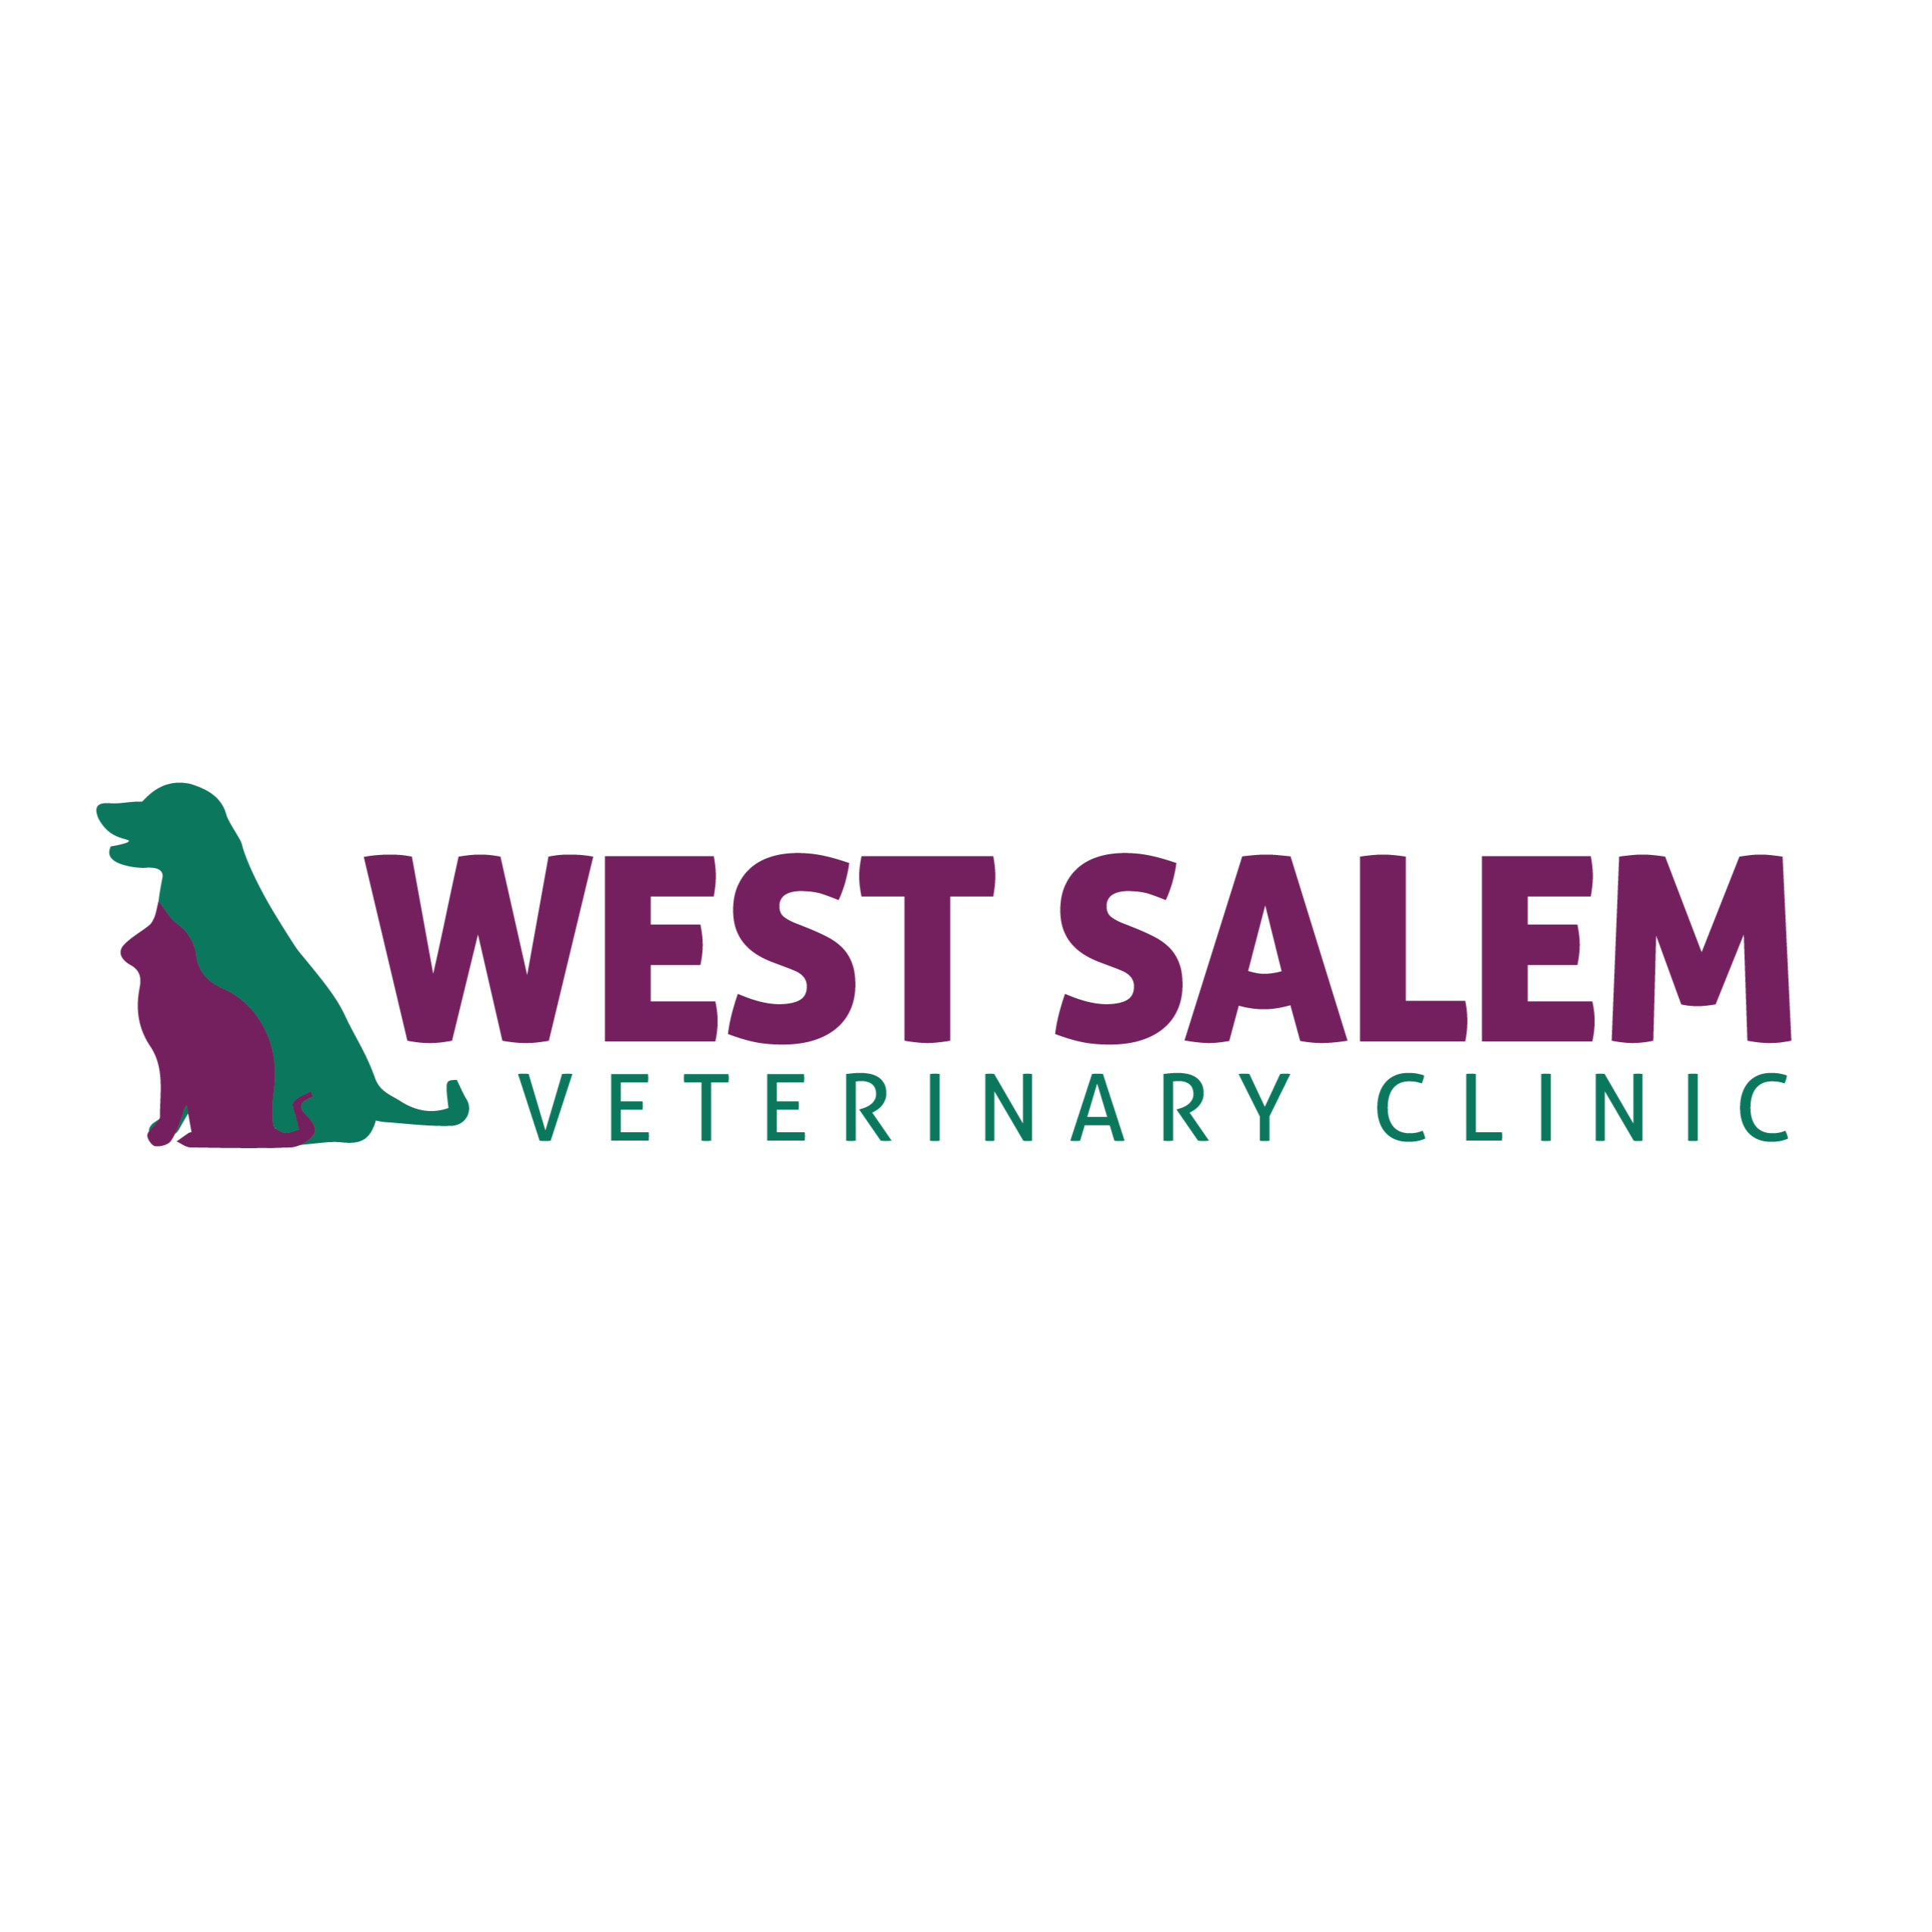 West Salem Veterinary Clinic